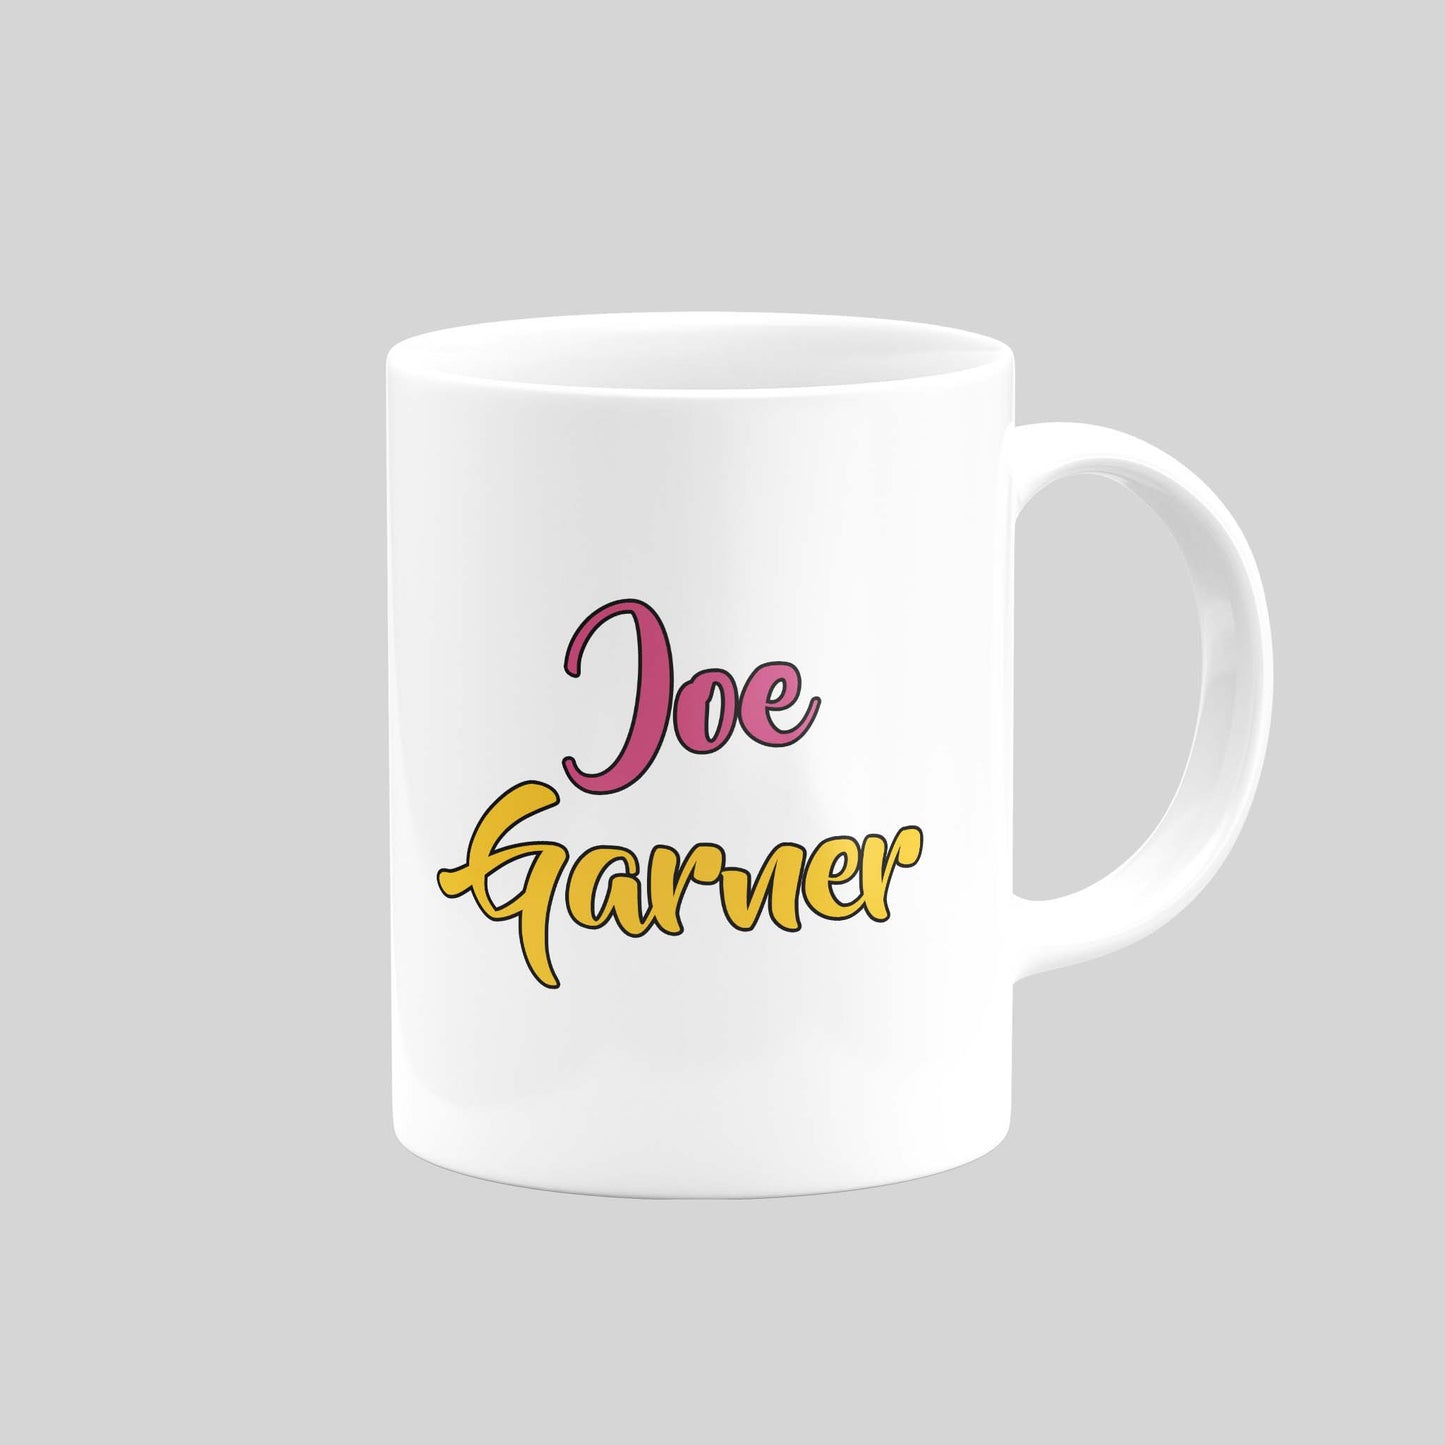 Joe Garner 23/24 Mug